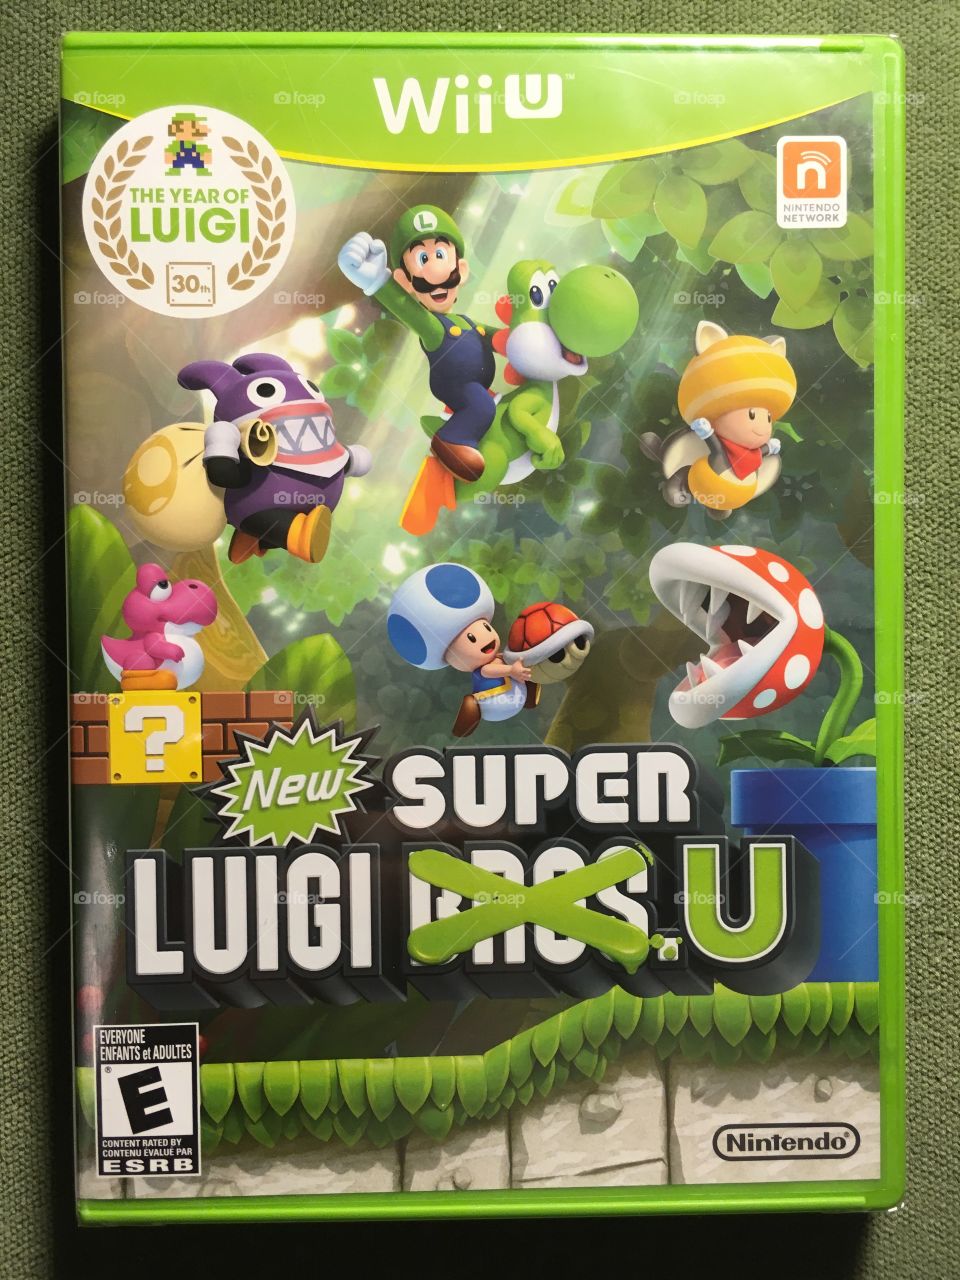 New Super Luigi U
Video game for Nintendo Wii U
Brand New Sealed
Released - 2013